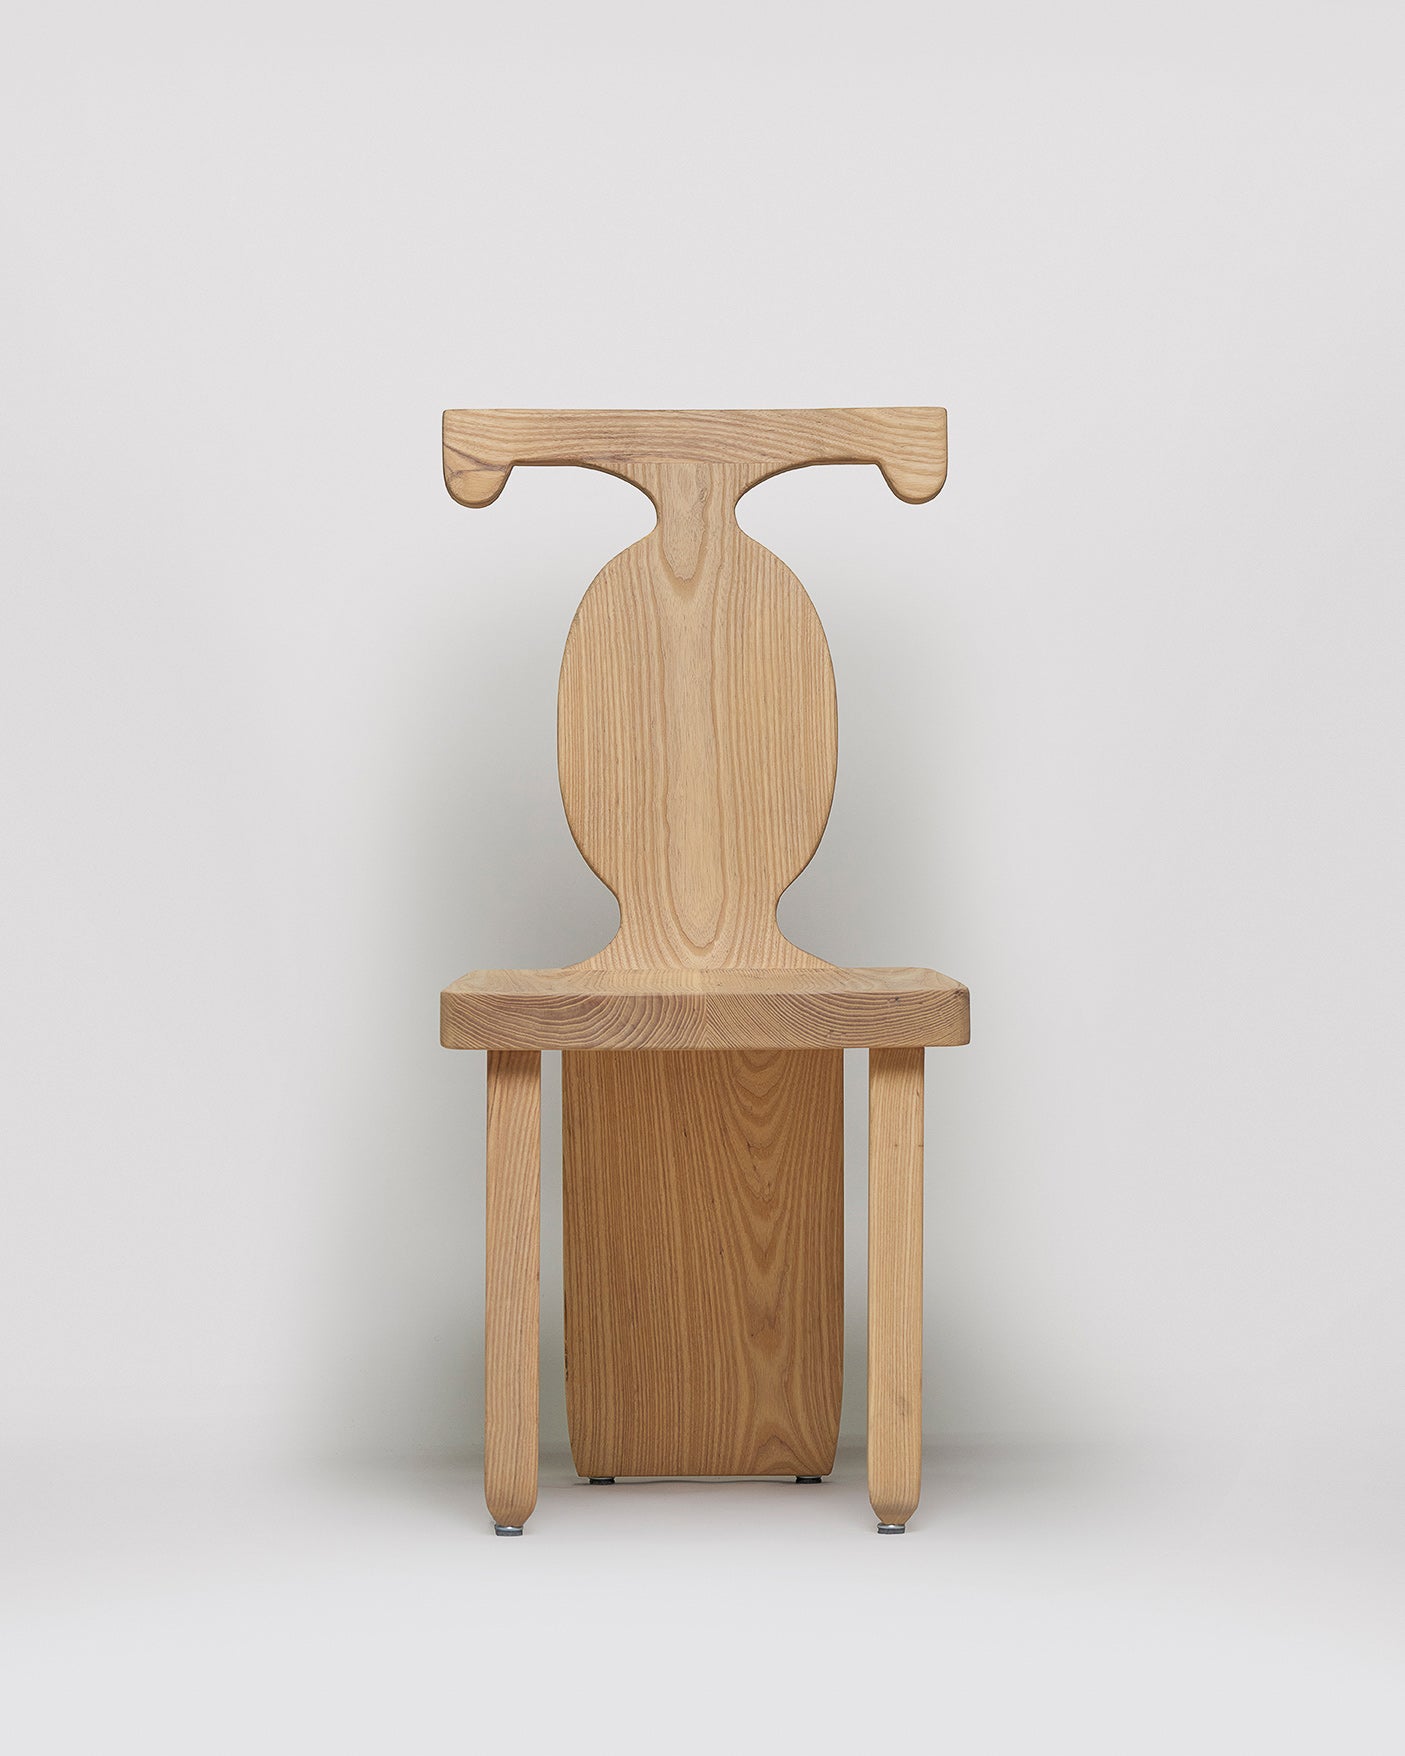 Sculptural African wooden chair in natural Ash